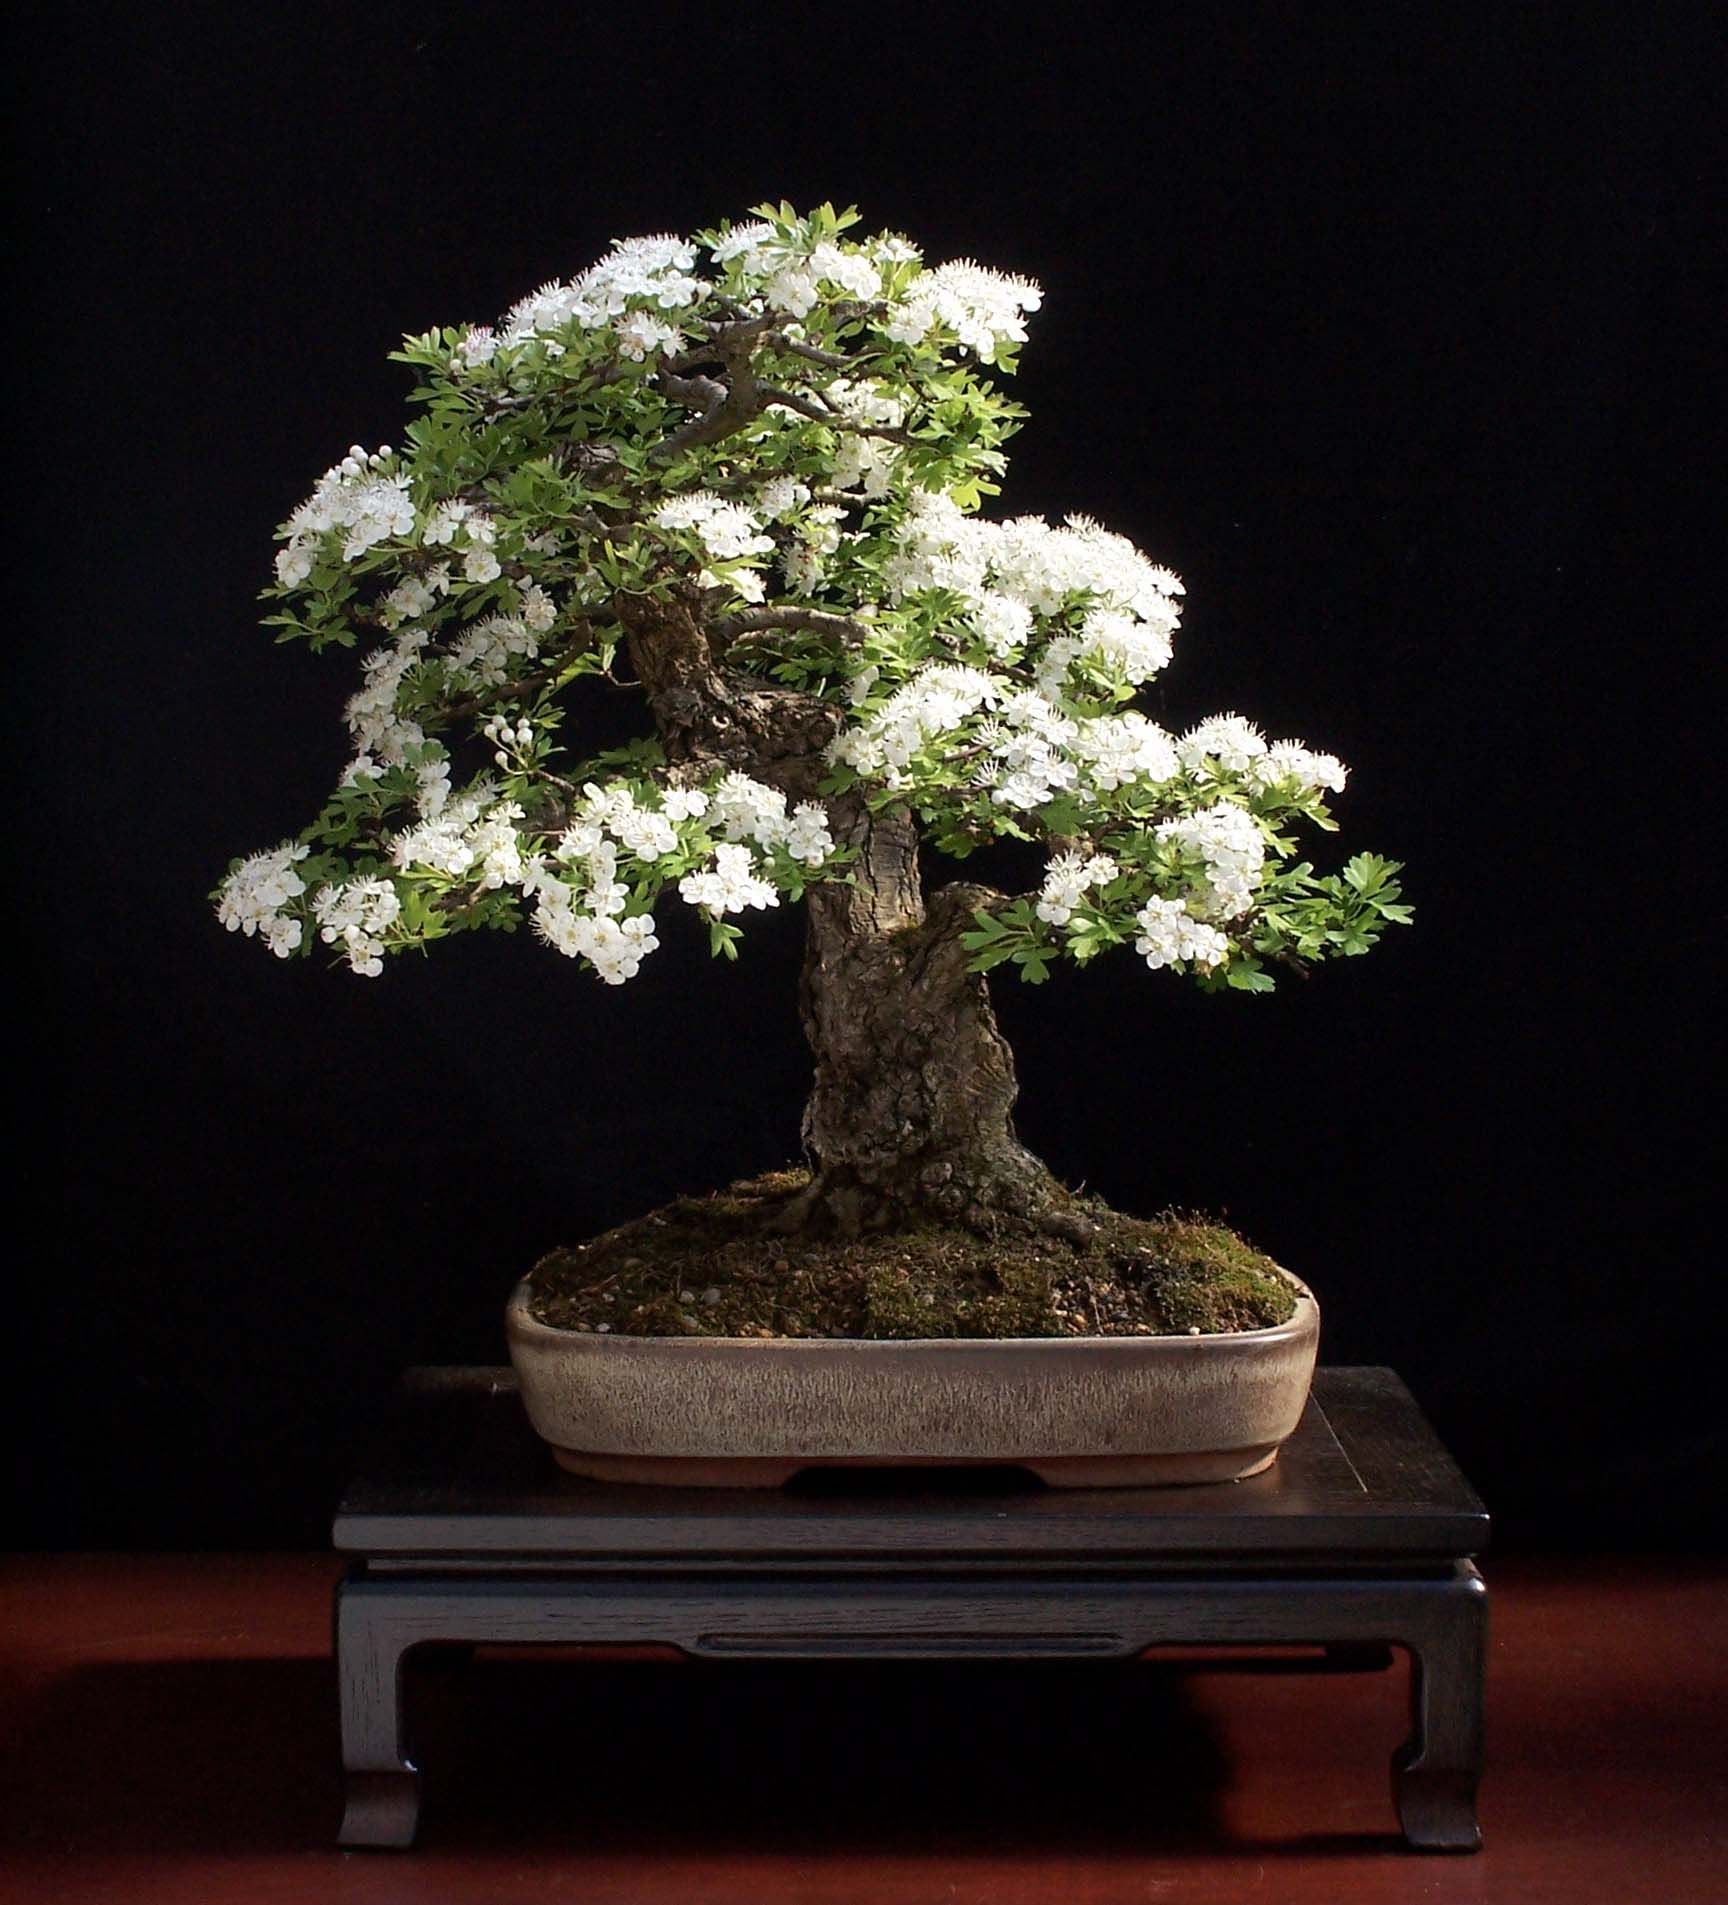 Bonsai Tree With White Flowers | home decor Ideas